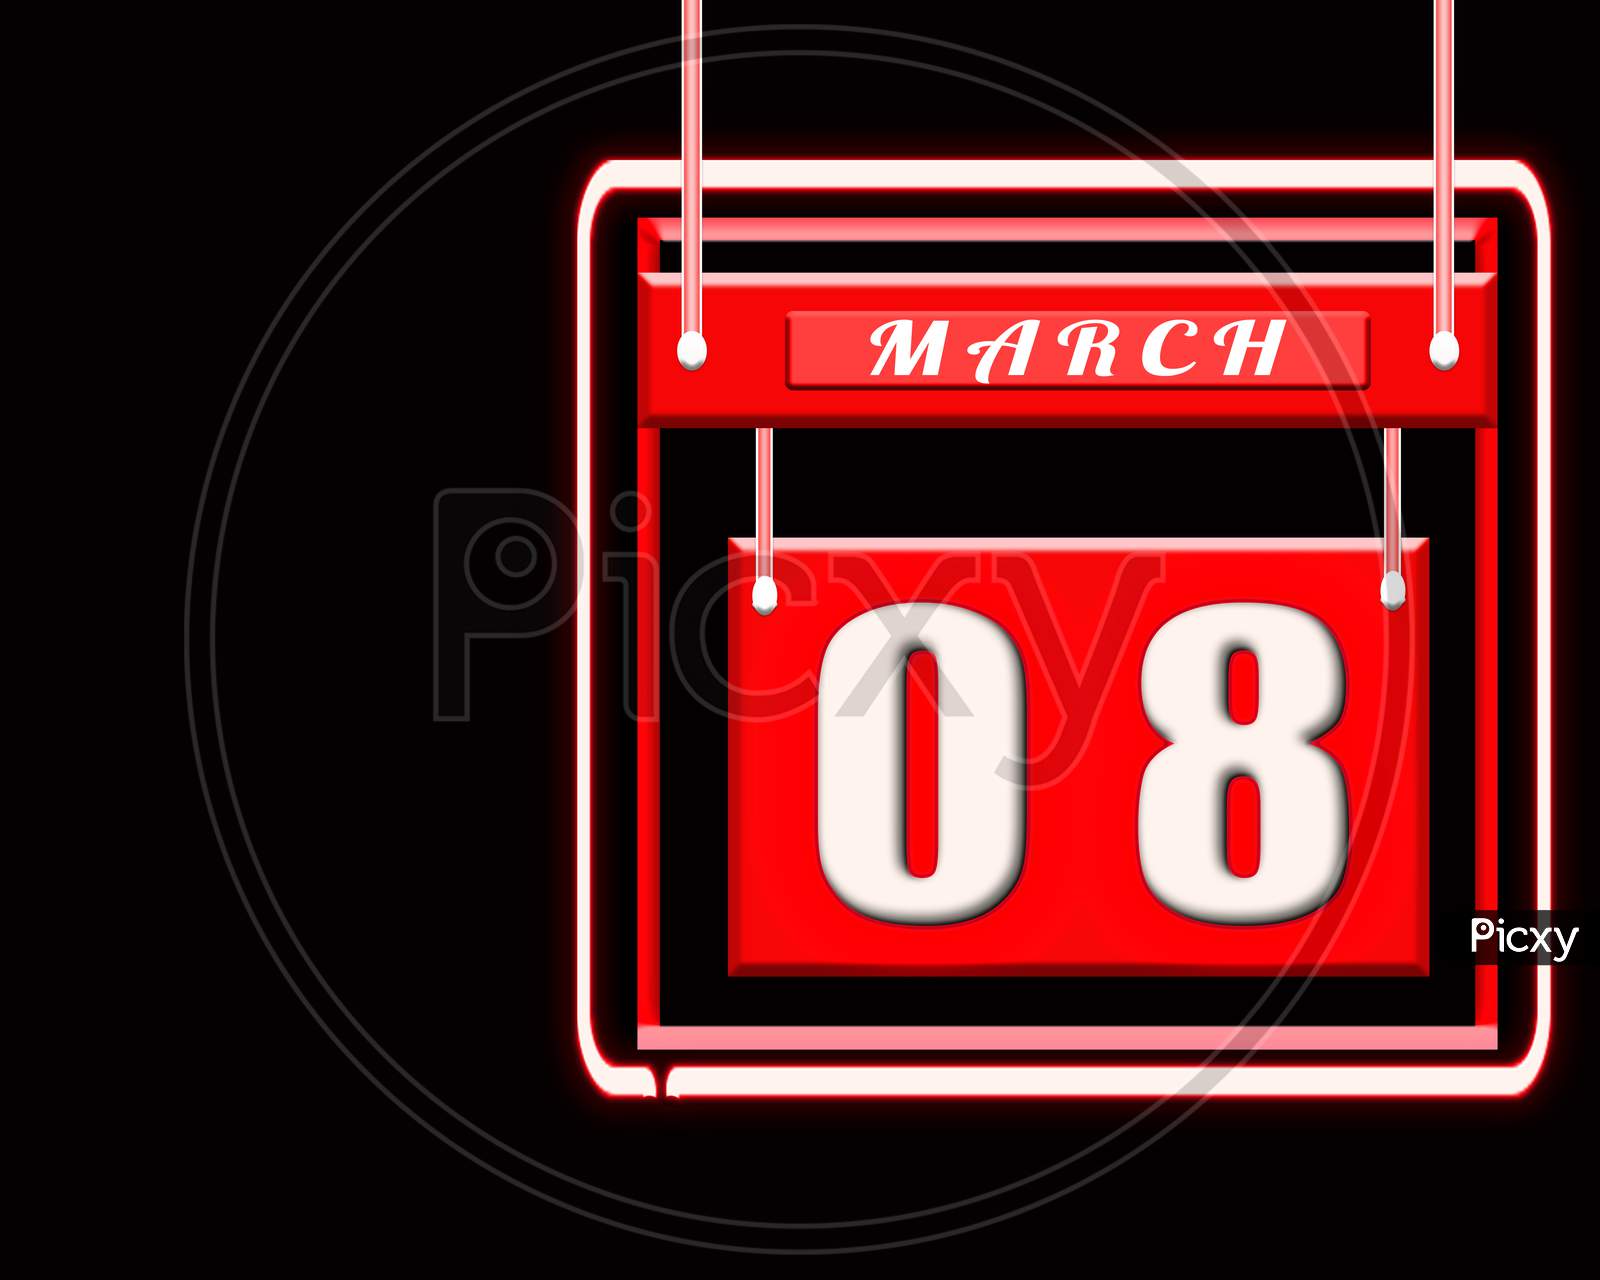 8 March, Red Calendar On Black Backgrand